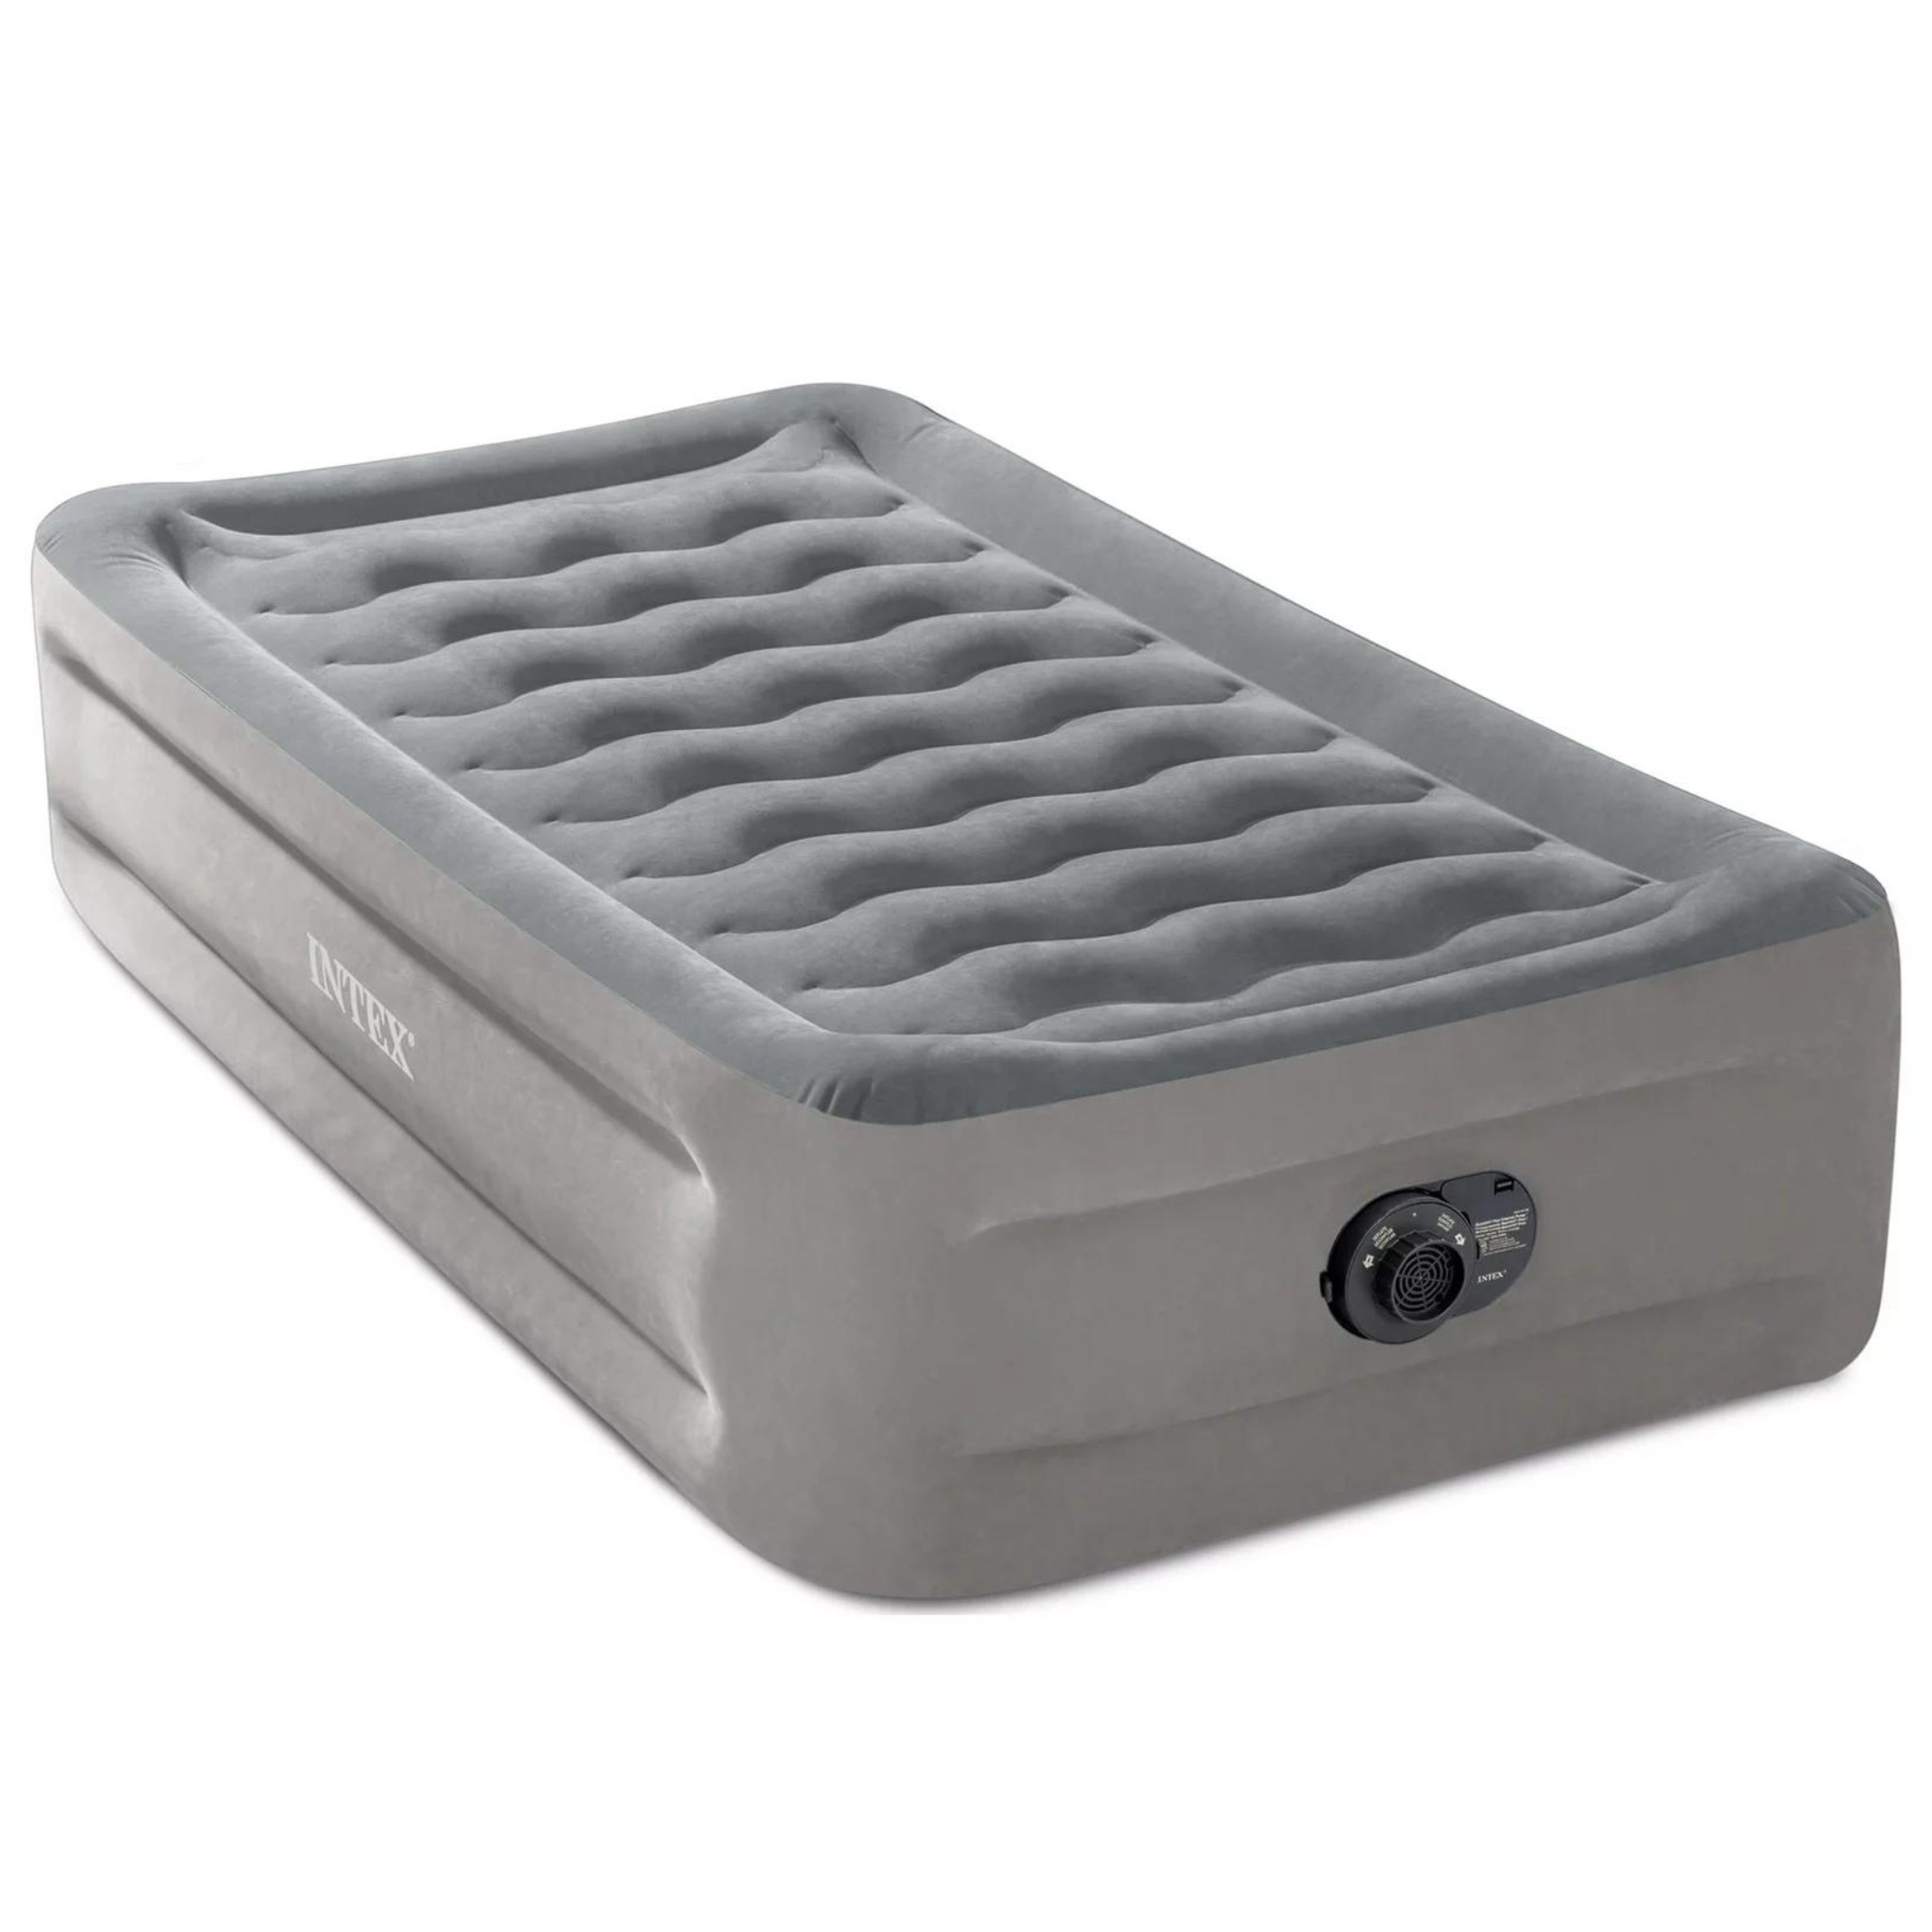 Intex 18-Inch Air Mattress Bed with Built-in Pump - Twin